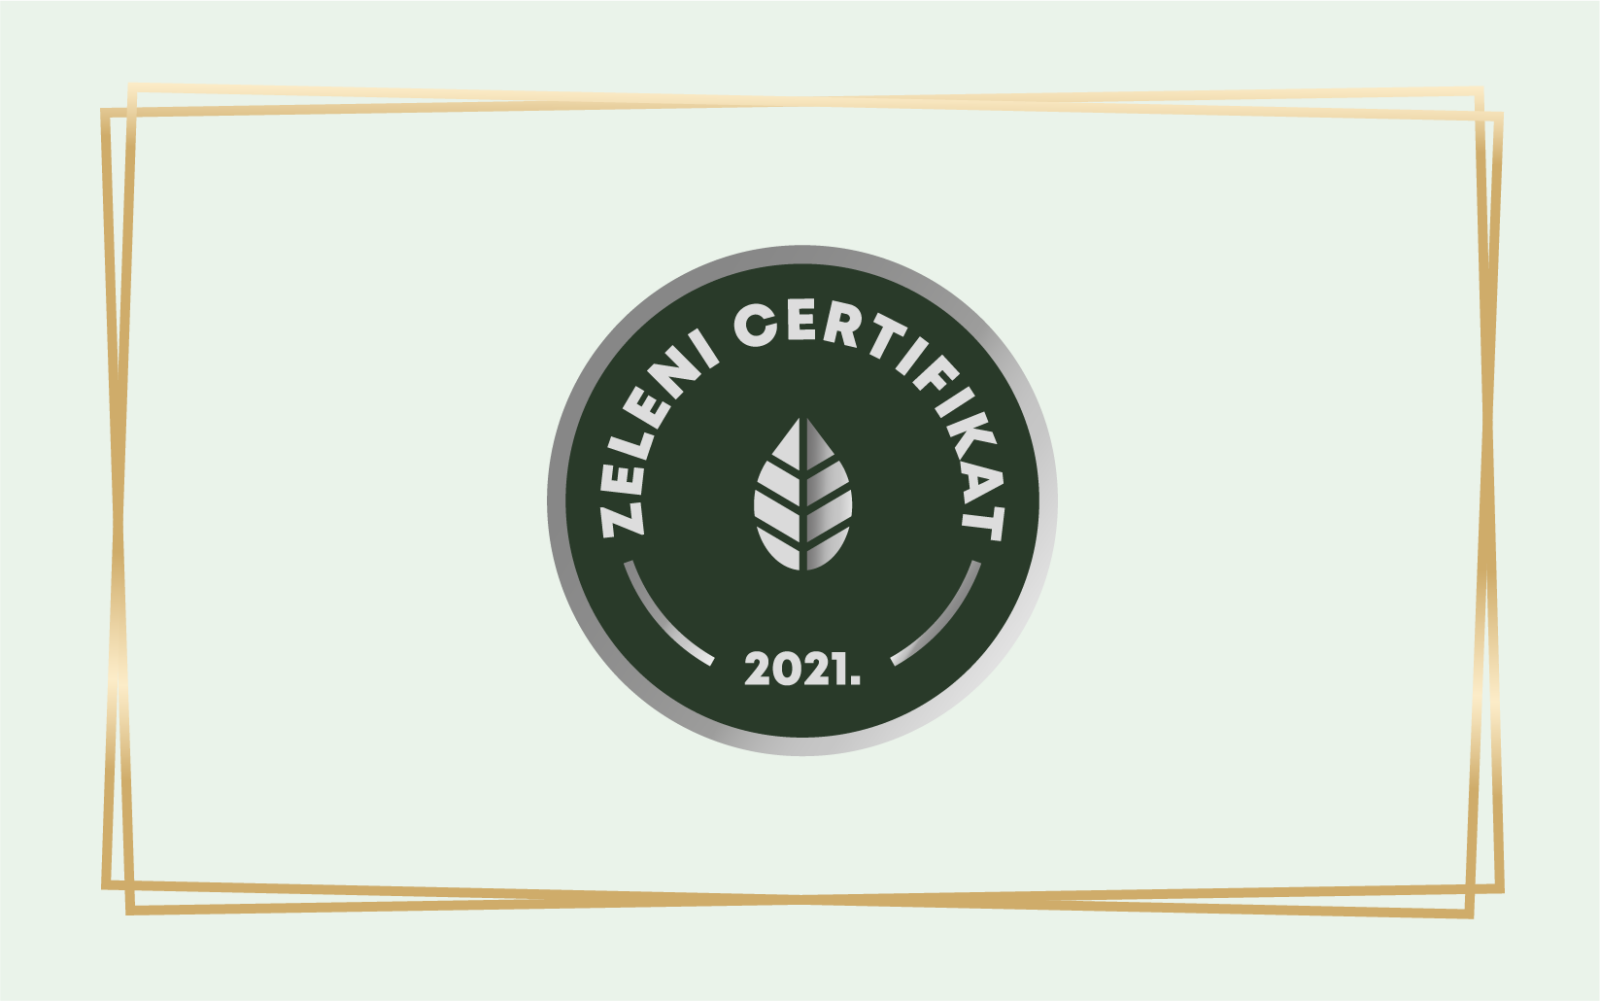 PENTA d.o.o. receives a Green Certificate!